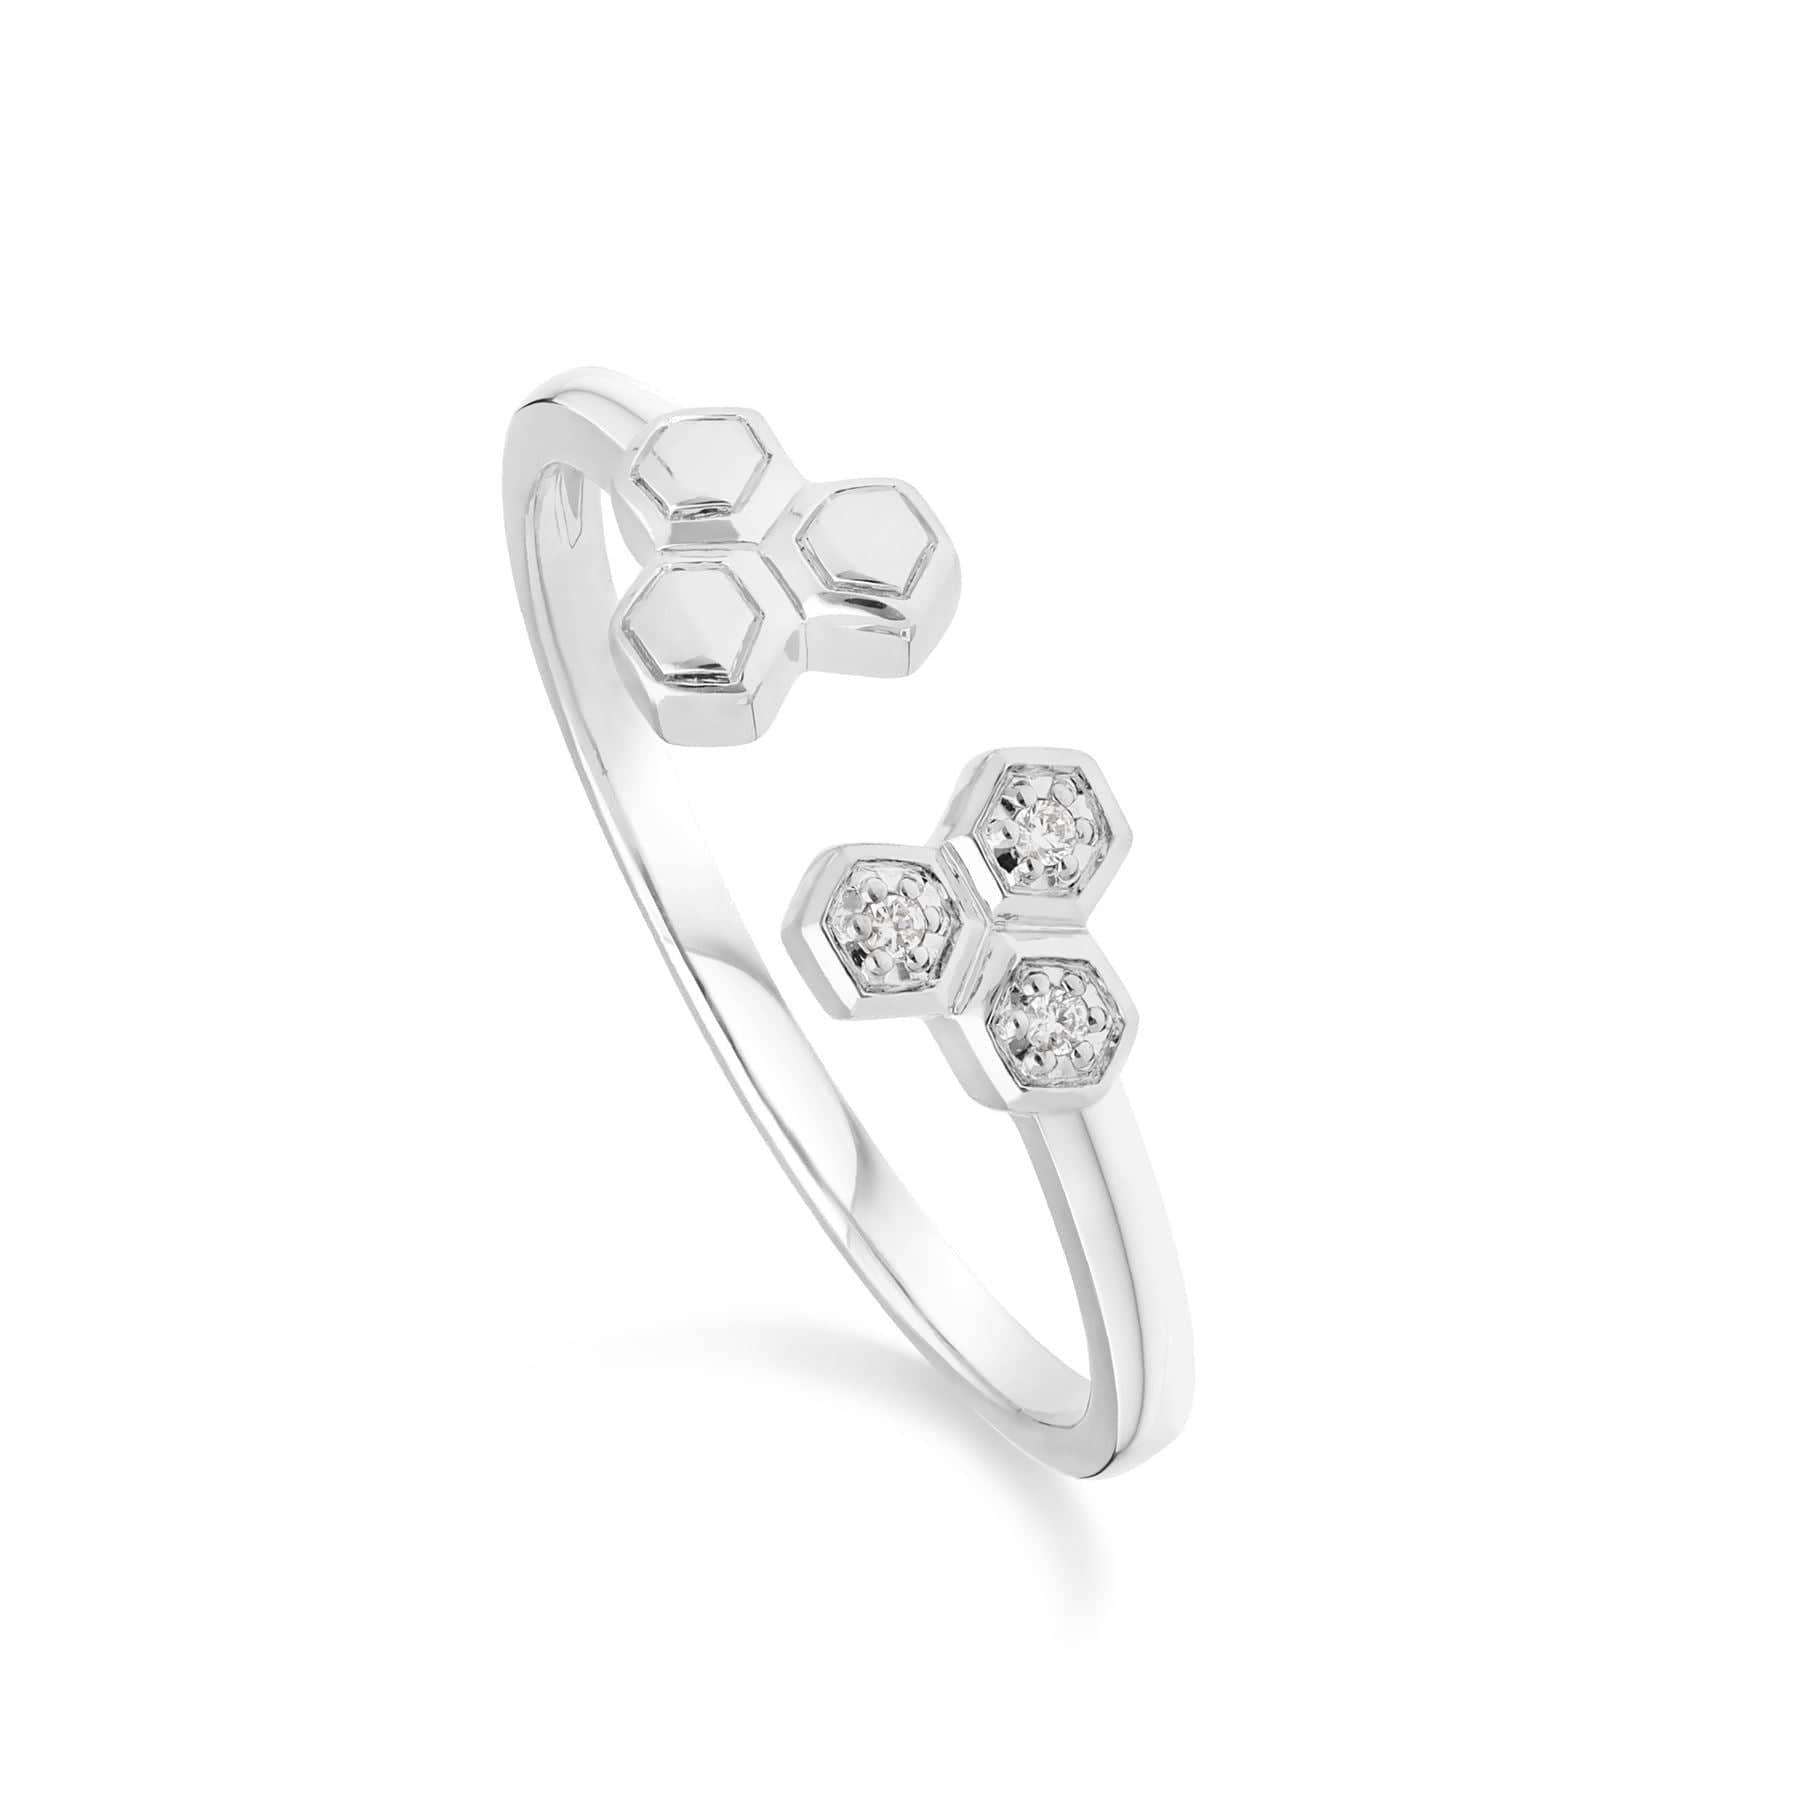 162E0272019-162R0393019 Diamond Trilogy Ring & Stud Earring Set in 9ct White Gold 3